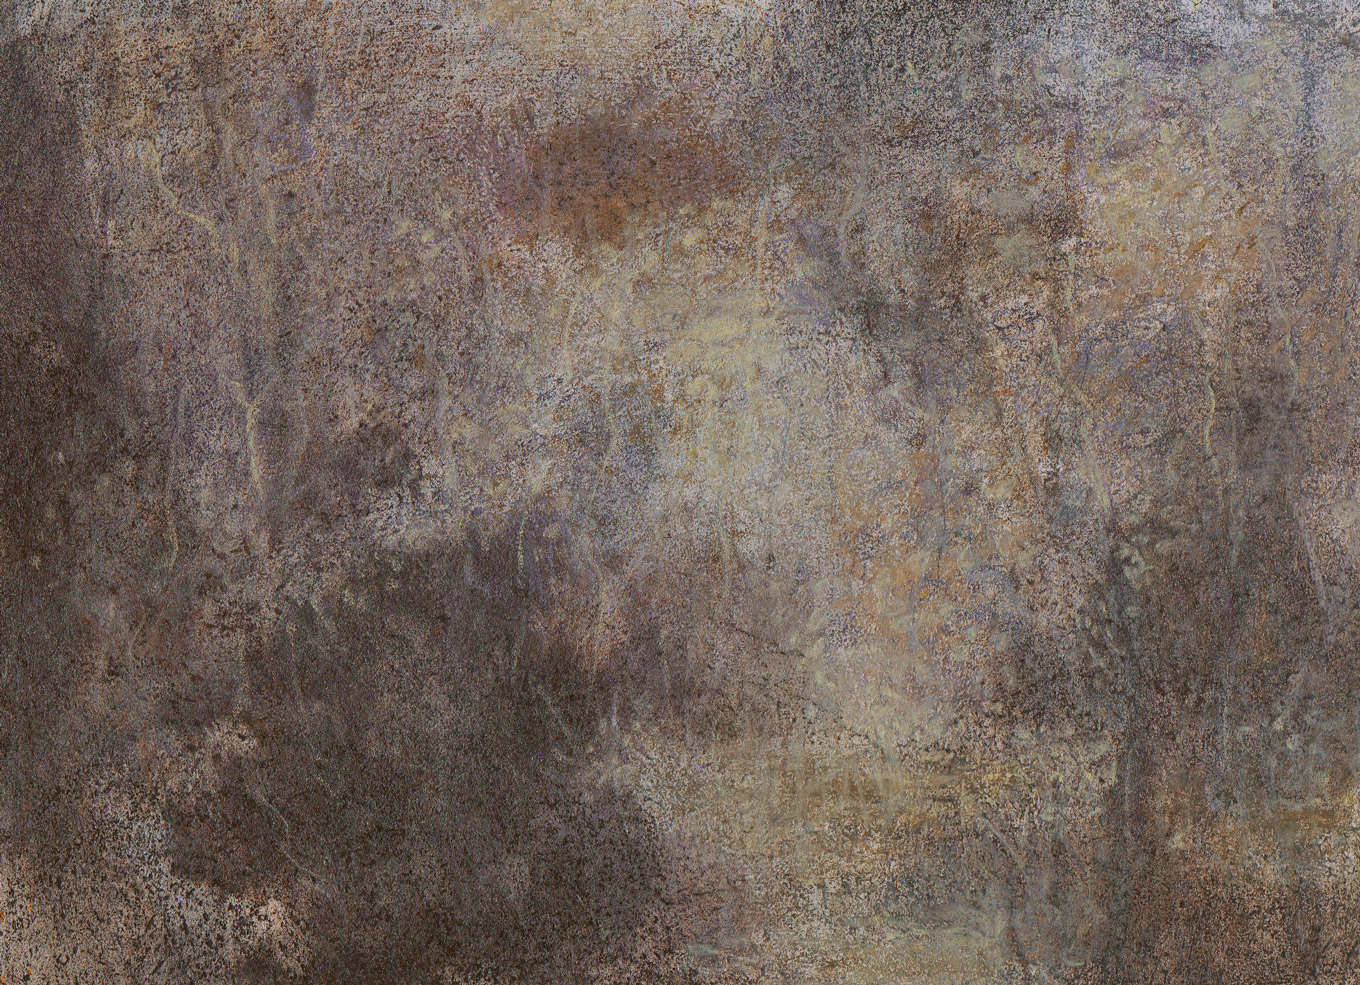 L1281 - Nicholas Herbert, British Artist, mixed media landscape painting of Mermaid Pond Greensand Ridge, 2021